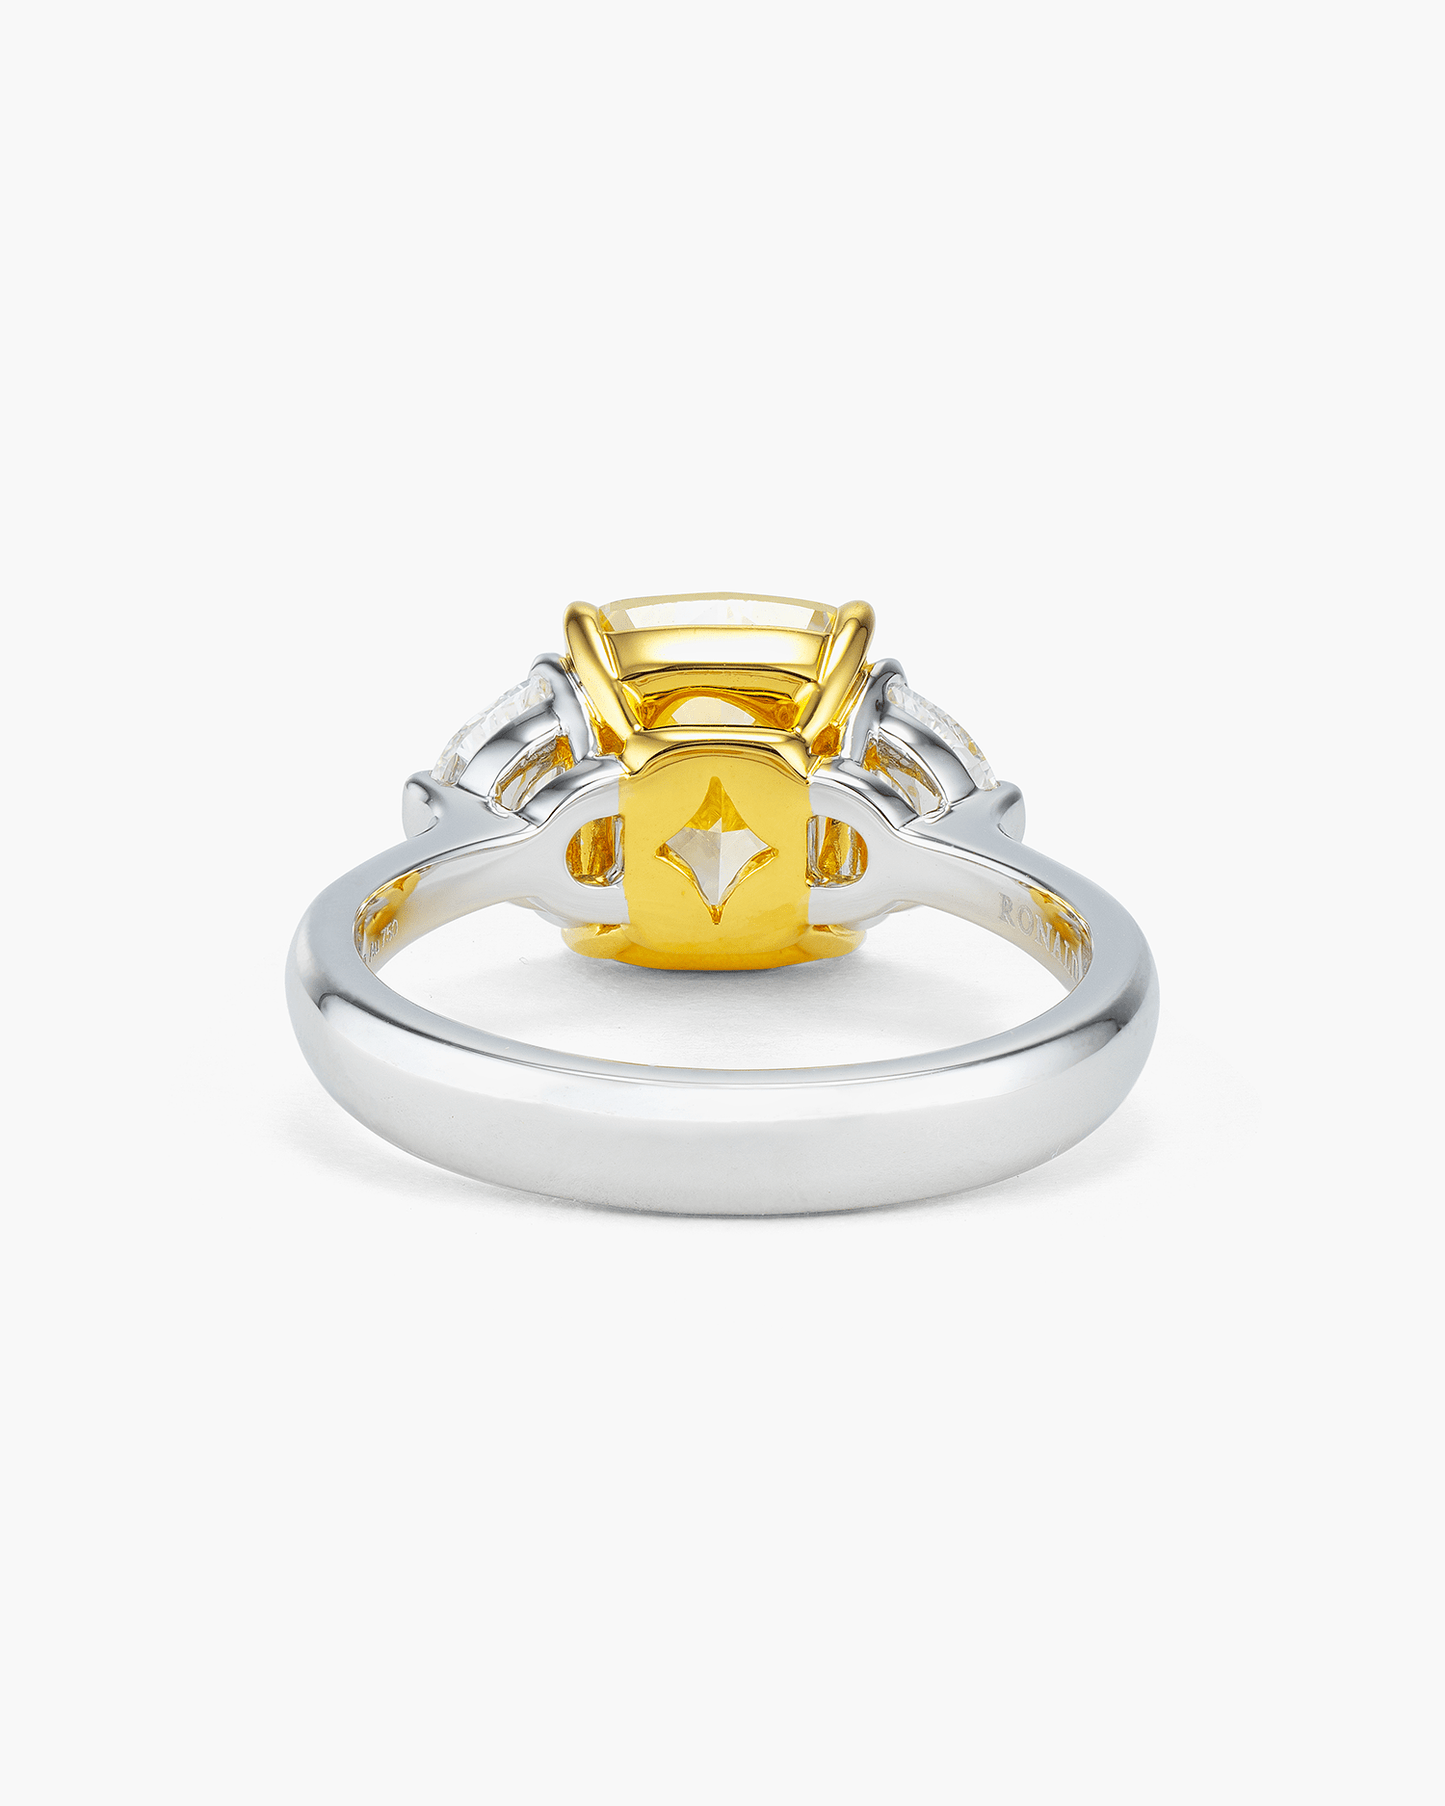 3.13 carat Cushion Cut Yellow and White Diamond Ring